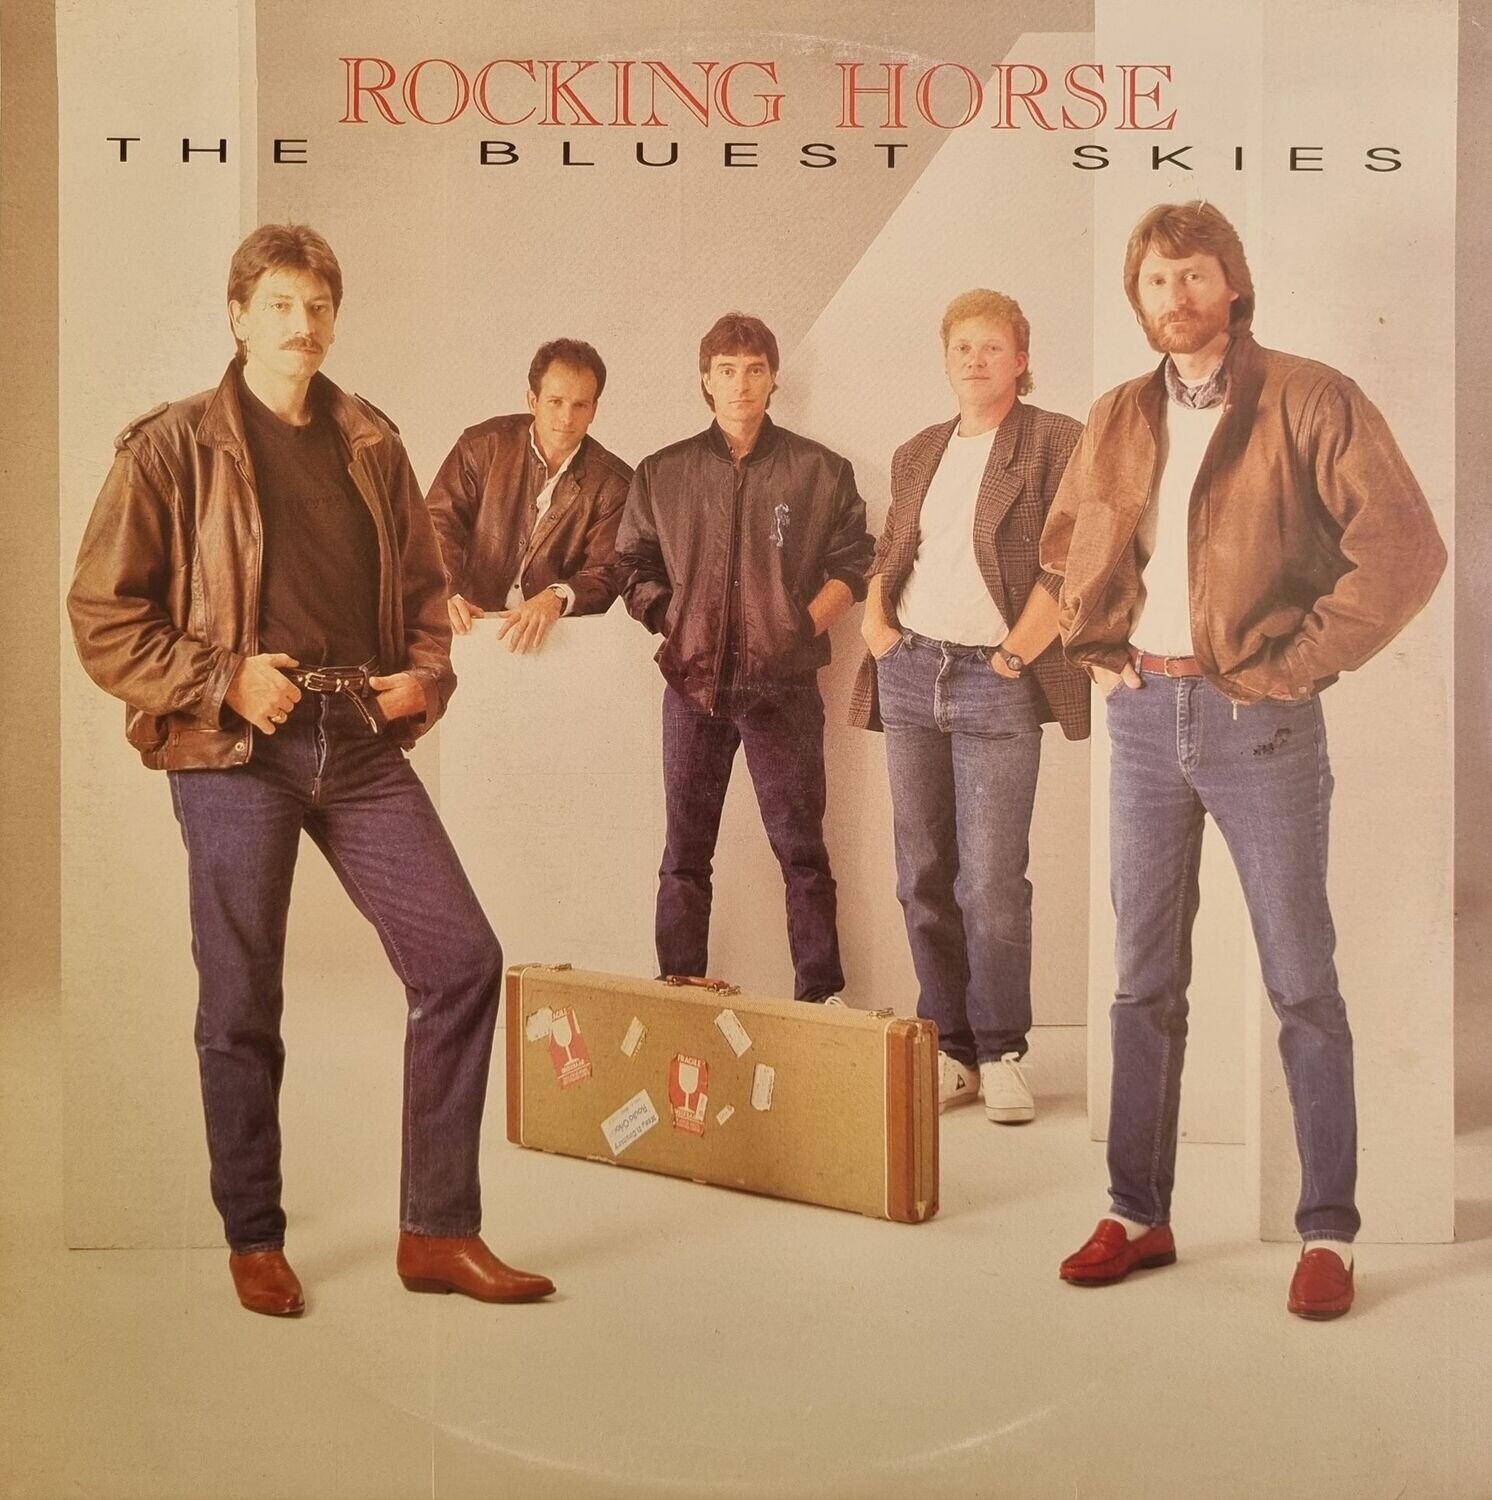 Rocking Horse - The bluest skies (1991)